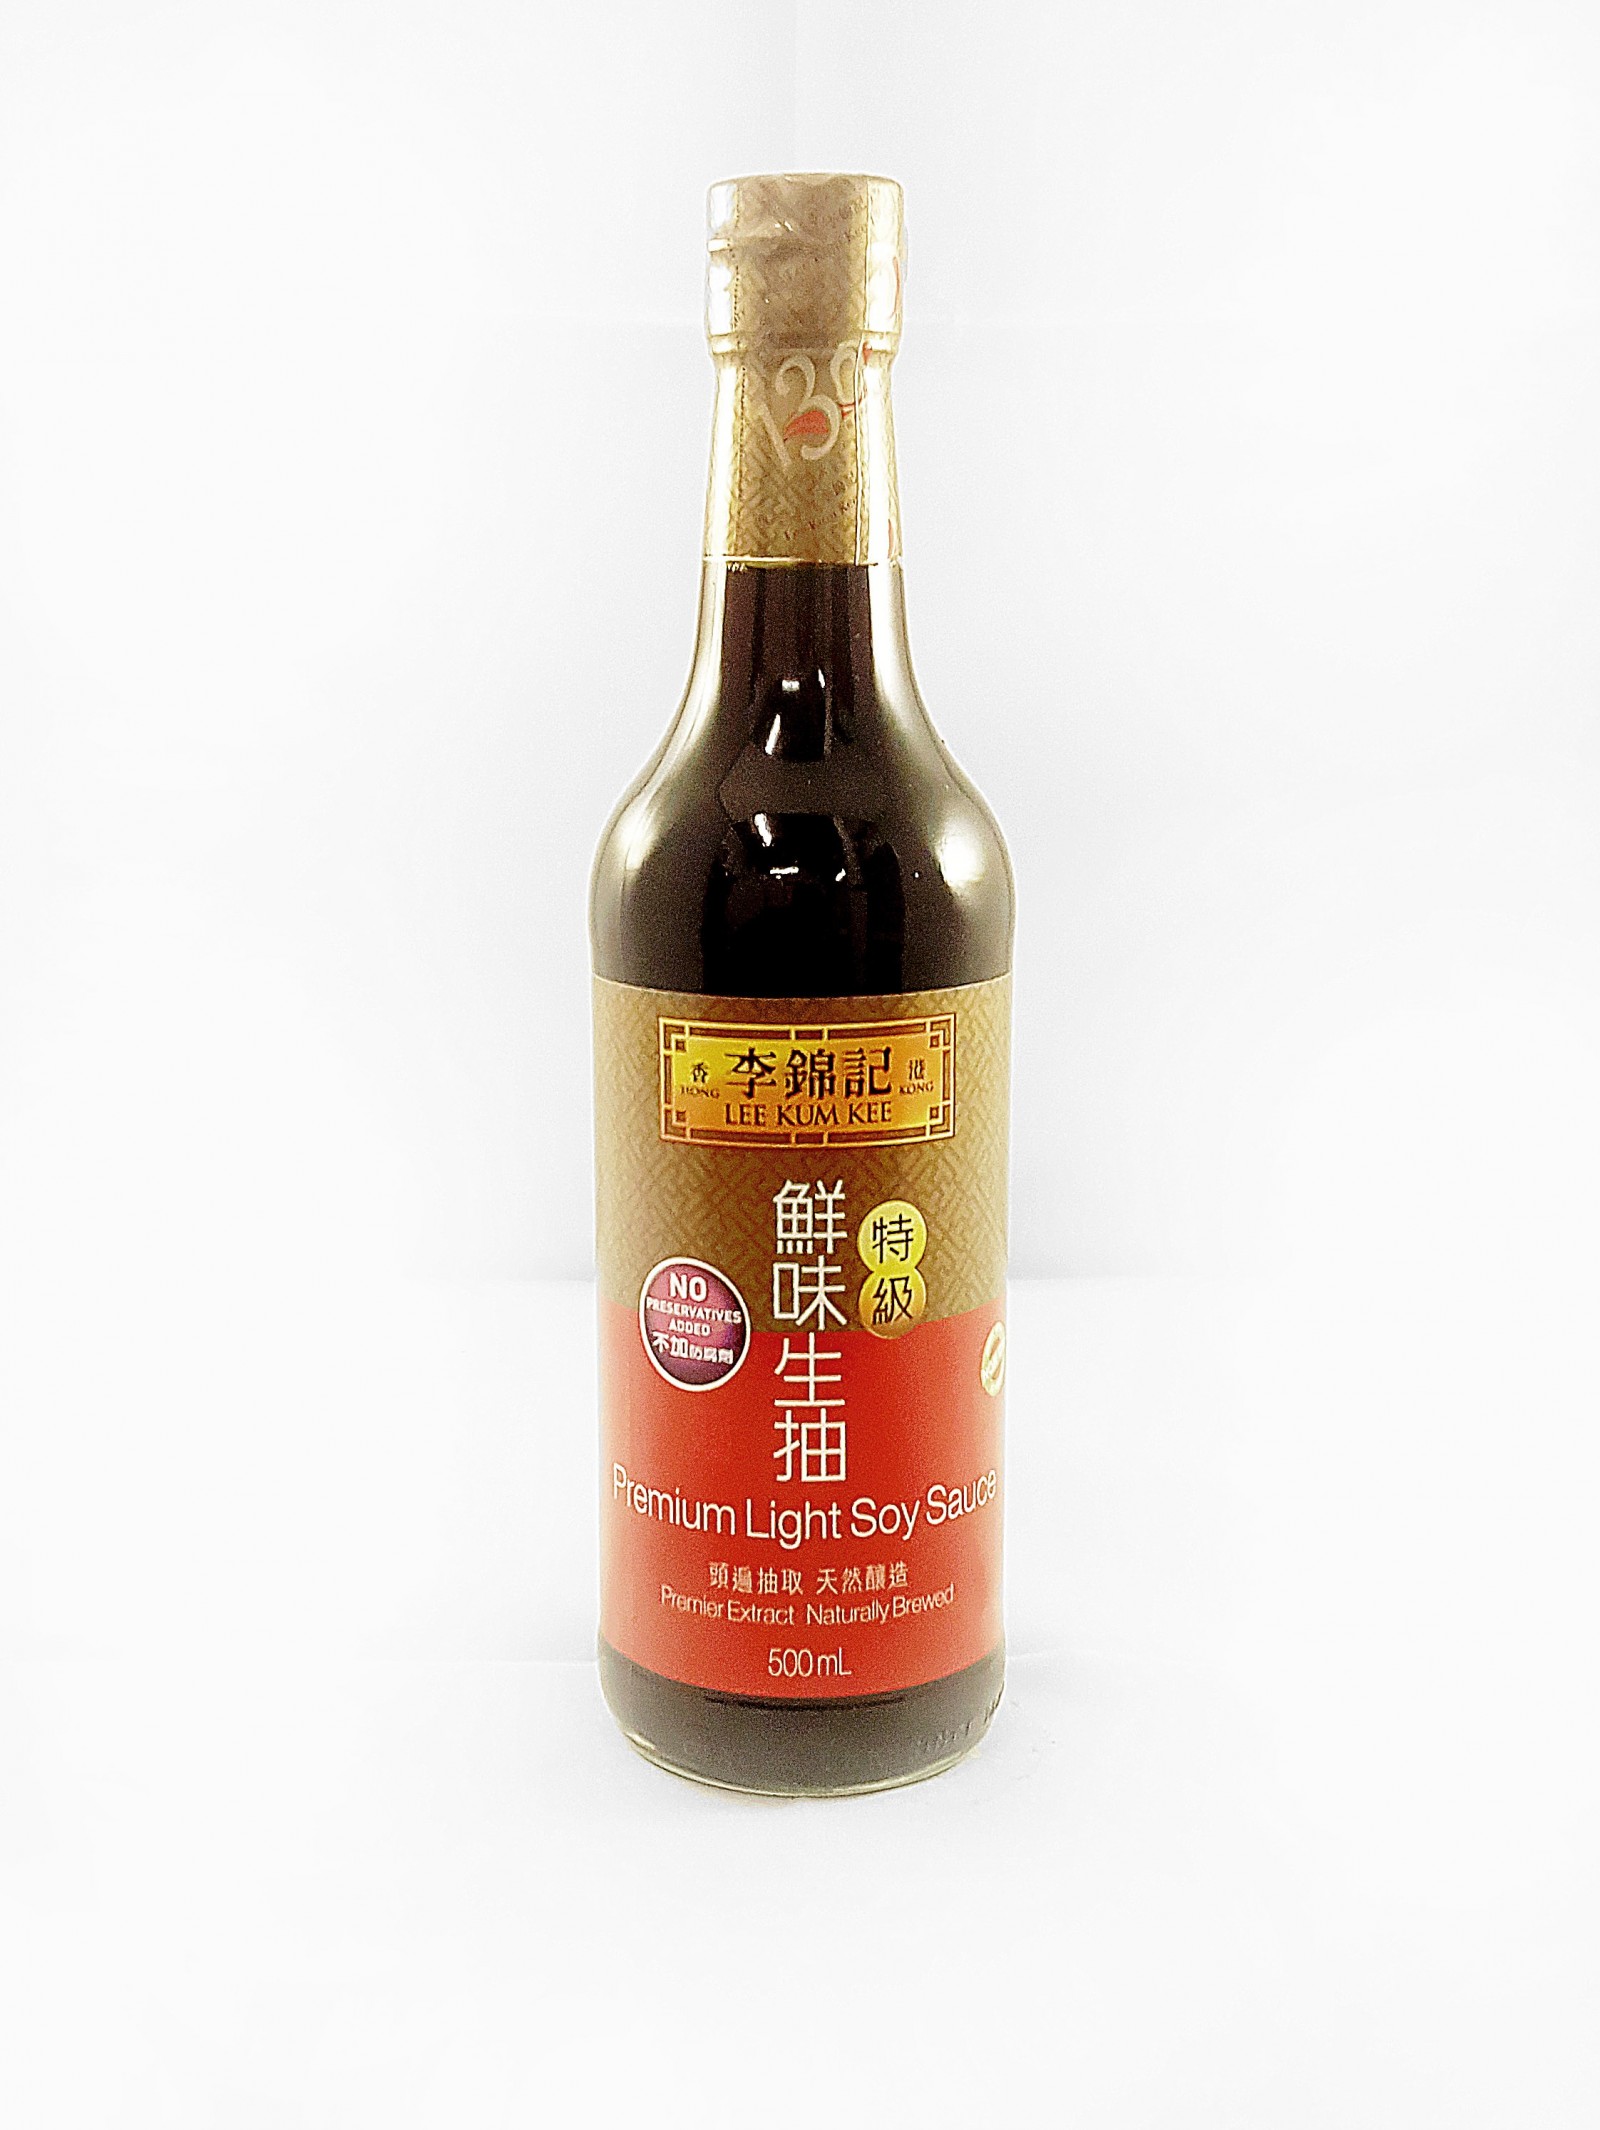 Lee Kum Kee Premium Light Soy Sauce 500ml - Soy Sauce & Fish Sauce ...